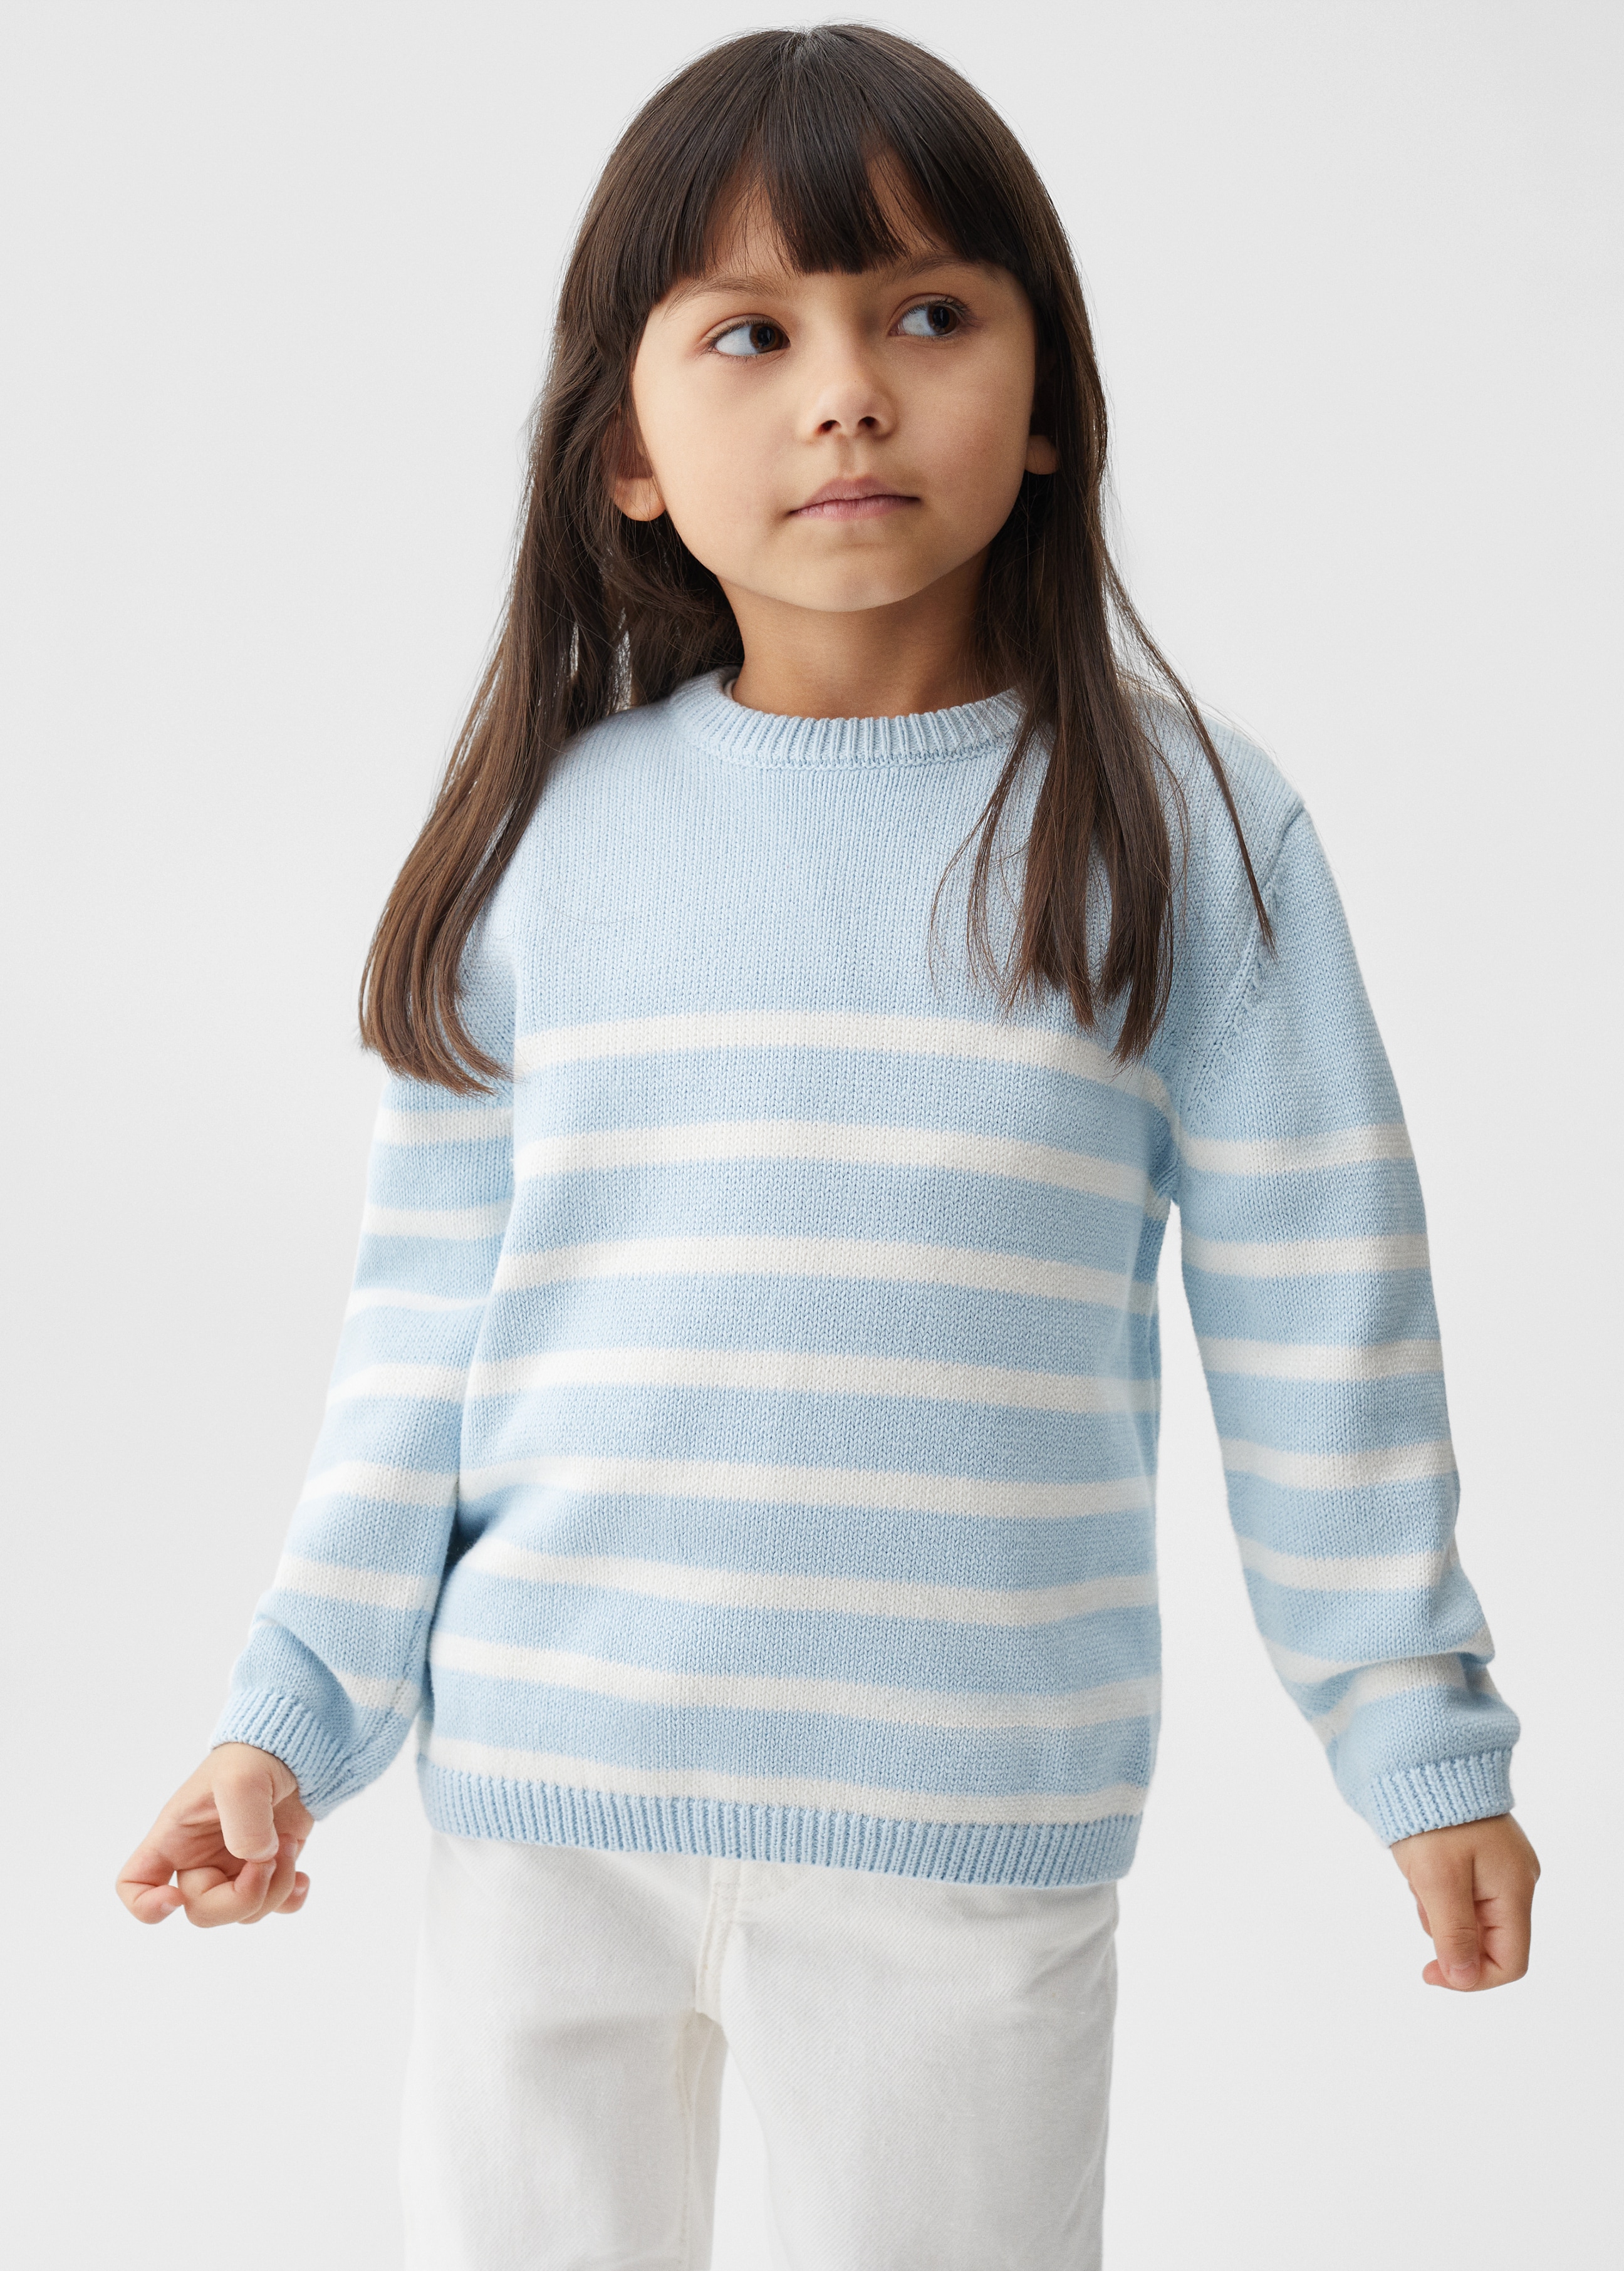 Stripe pattern sweater - Medium plane